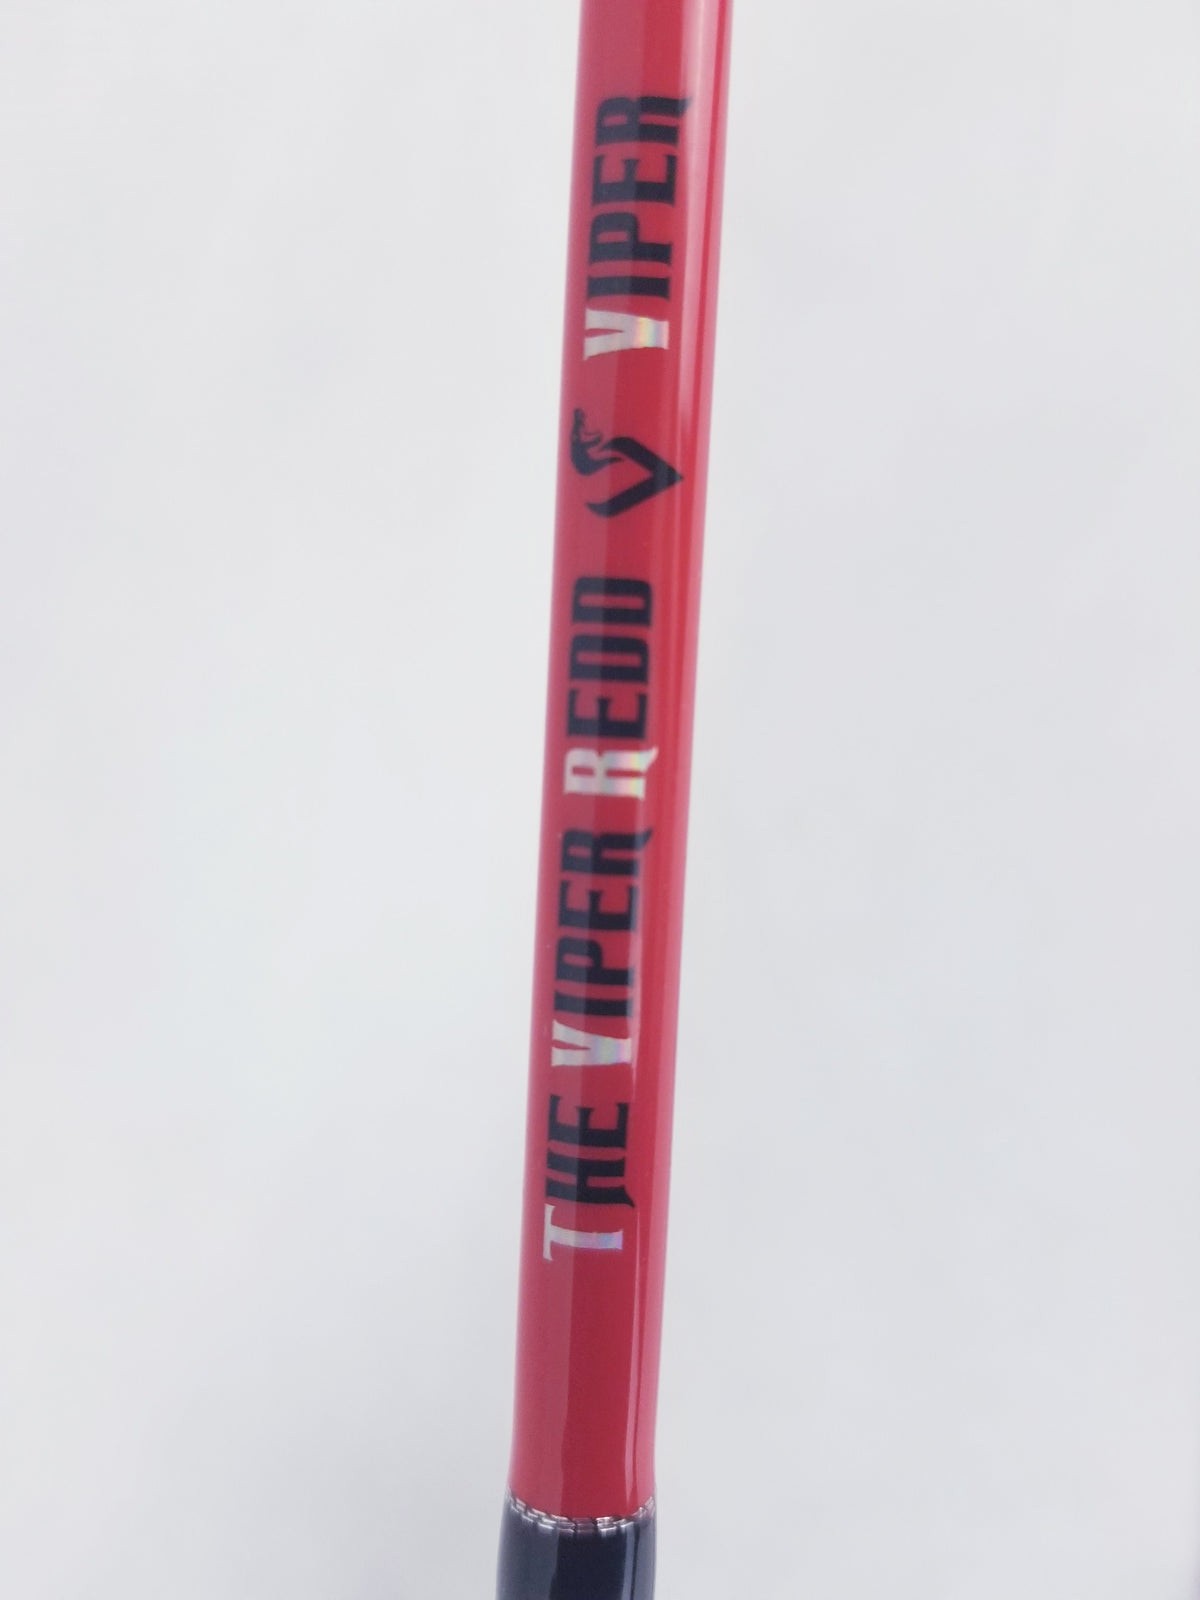 Cam's The Viper Redd" Complete 6'6"ft.  Xtralite Carbon Fiber 9 Ball Bearing Rod & Reel Combo